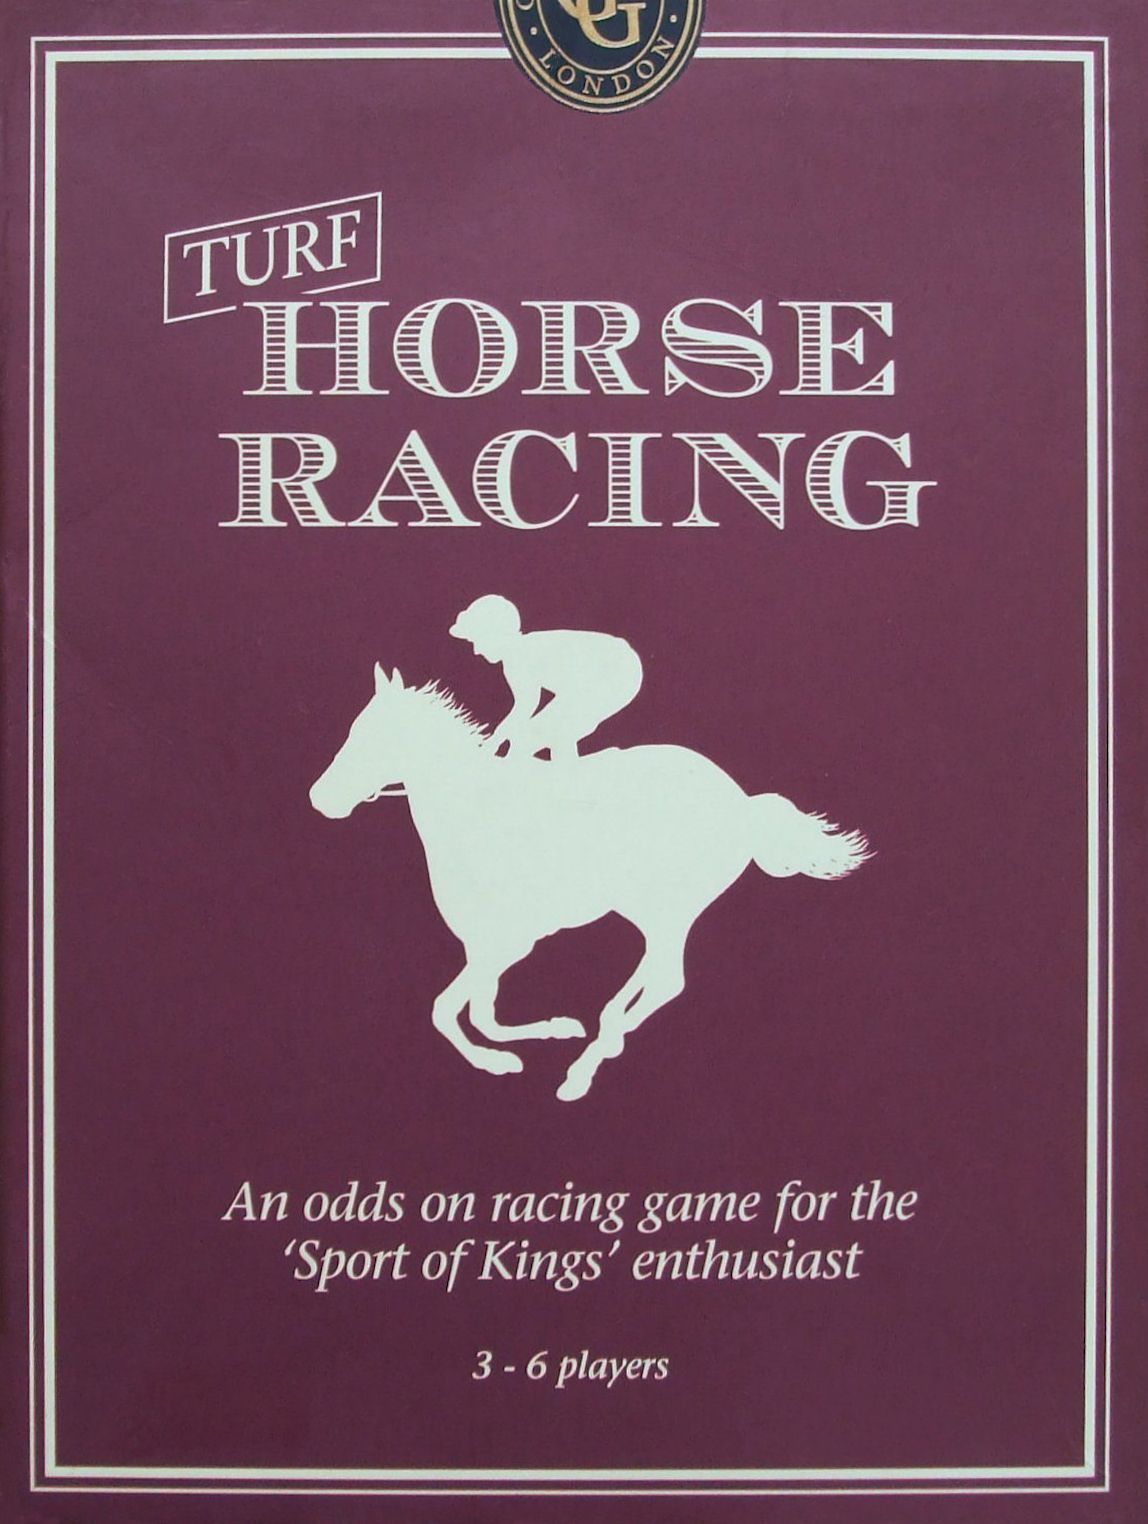 Turf Horse Racing